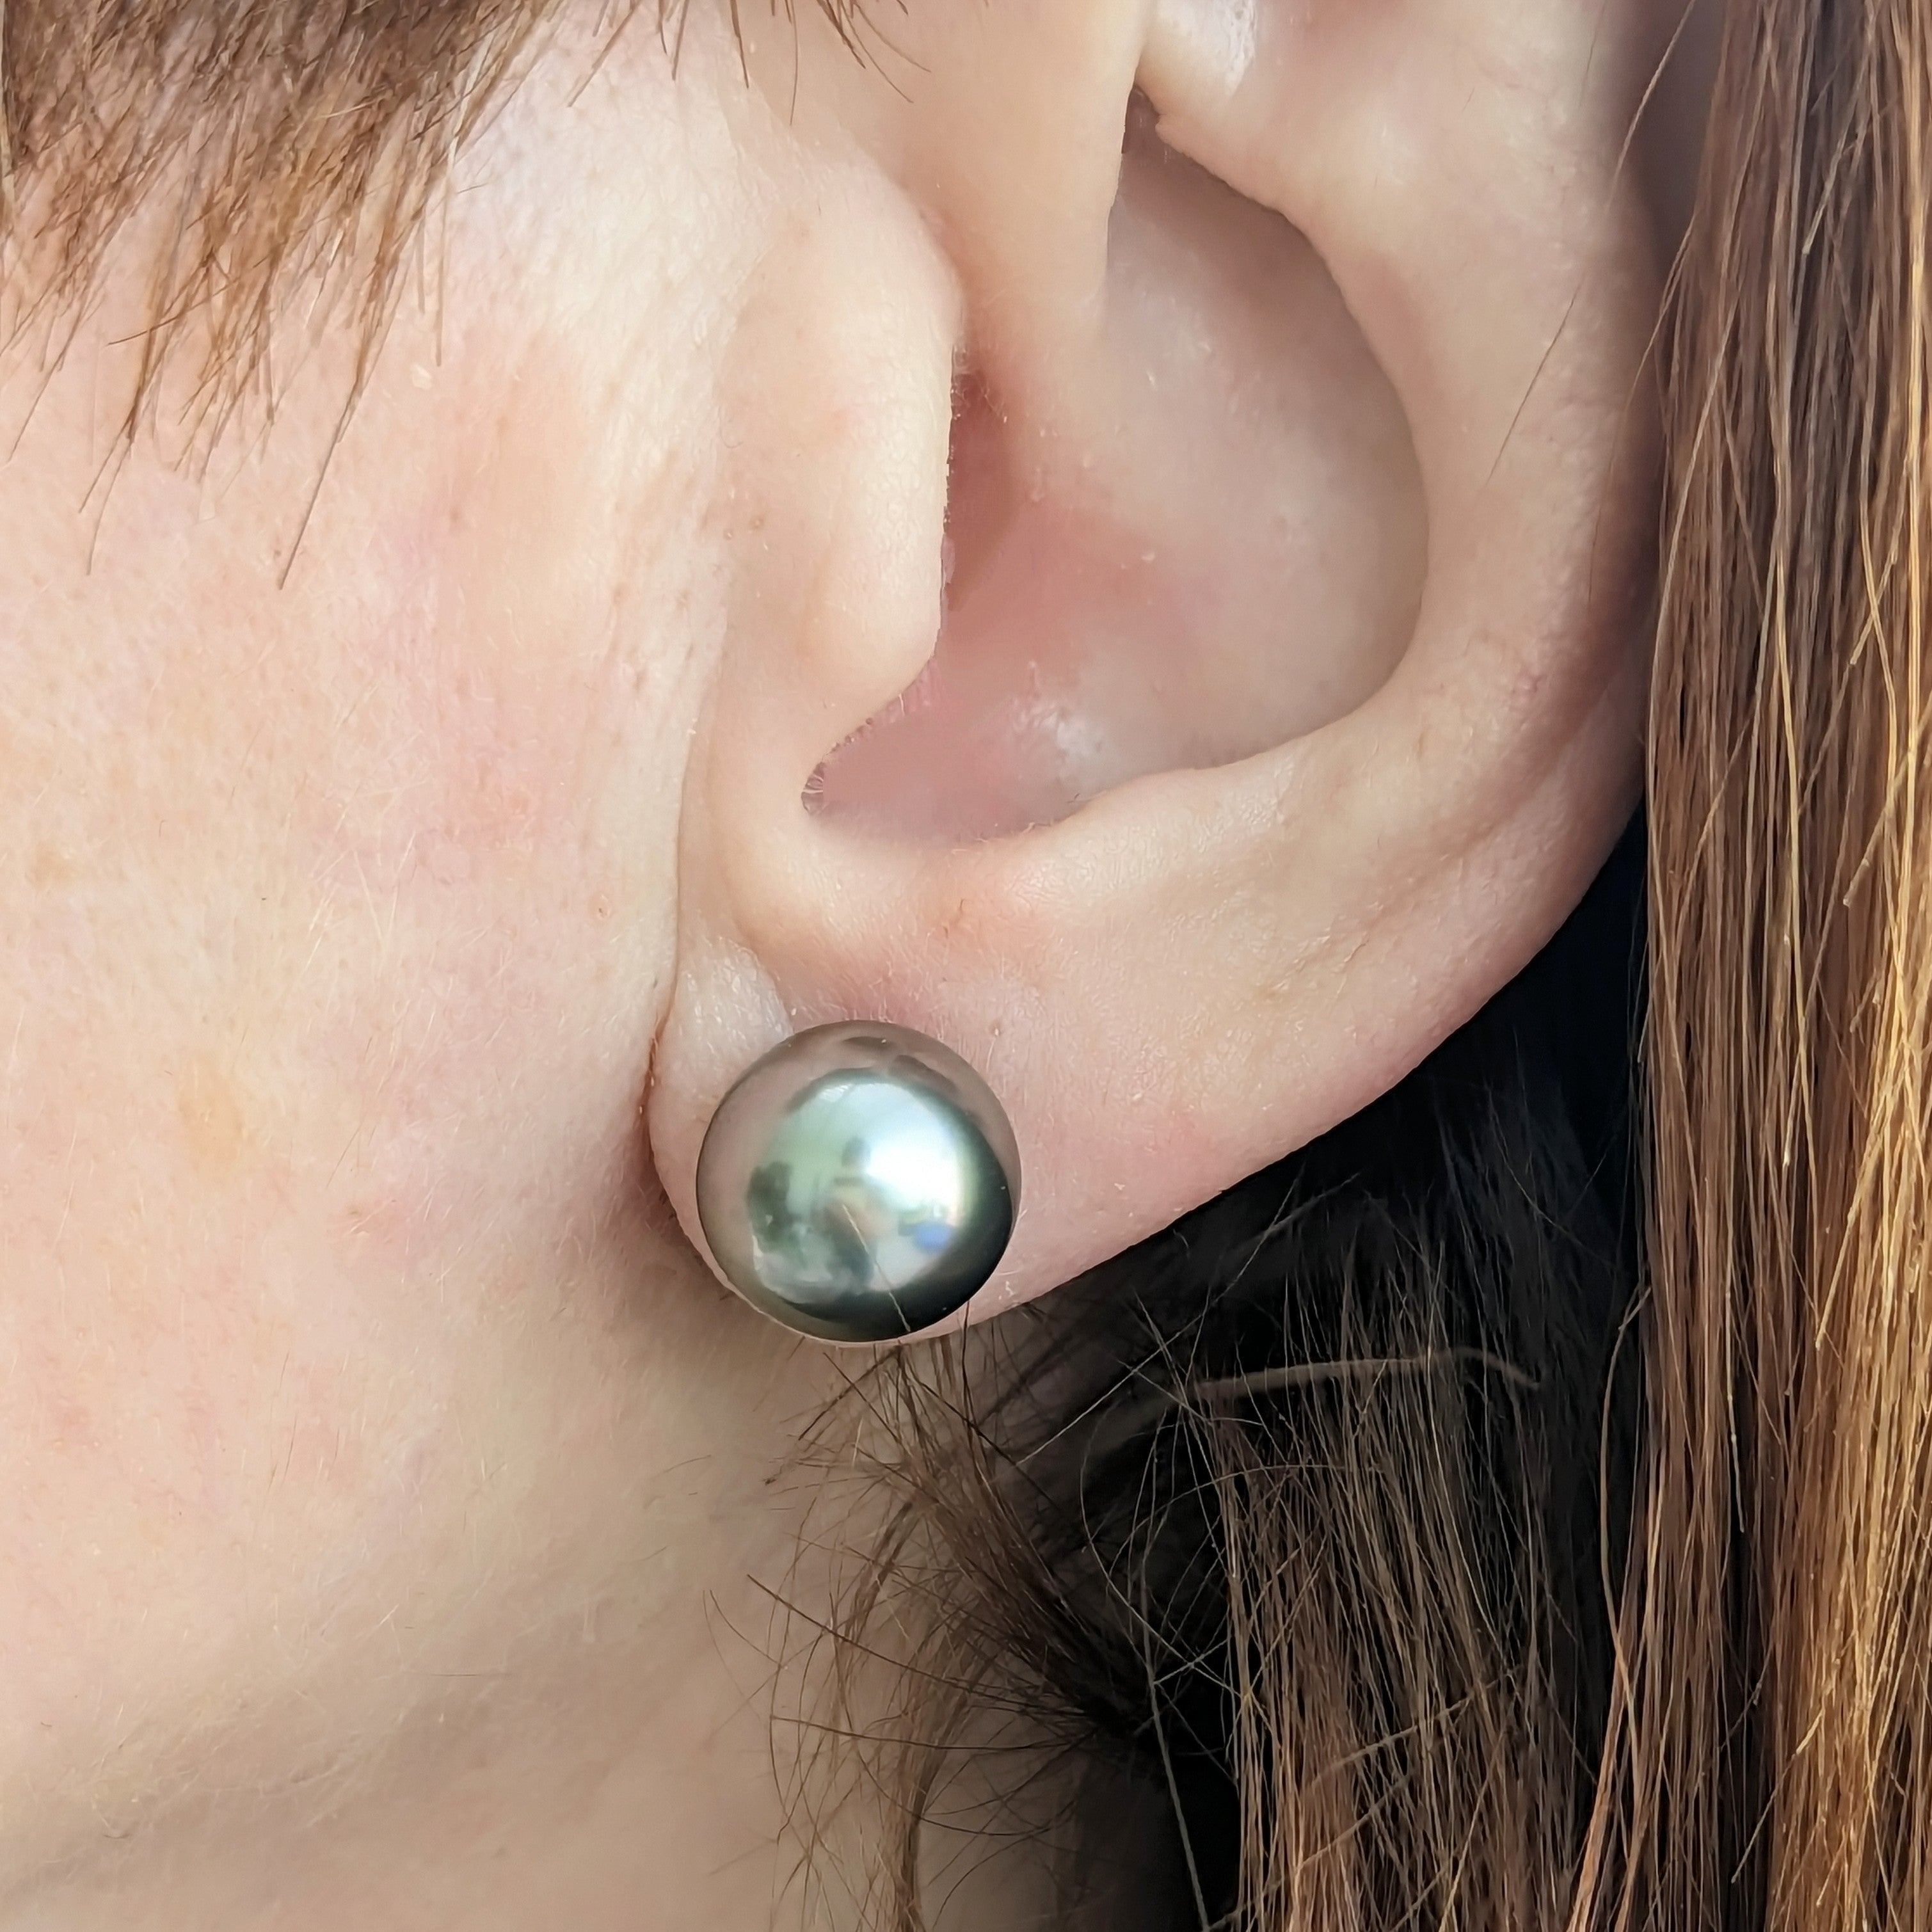 11-12mm Tahitian Pearl Stud Earrings - Marina Korneev Fine Pearls